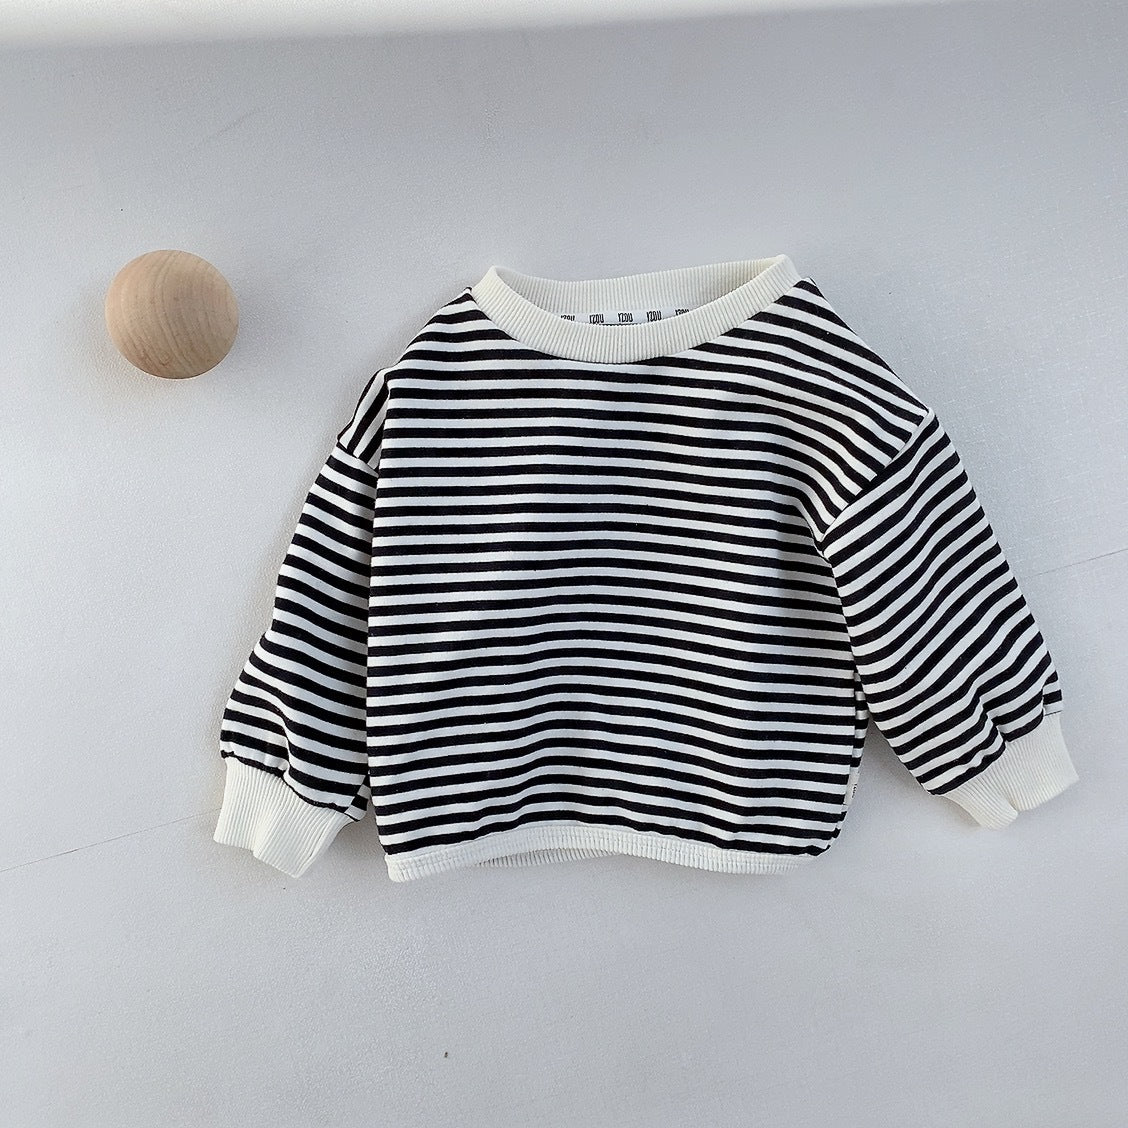 Children's New Striped Pullover Tops